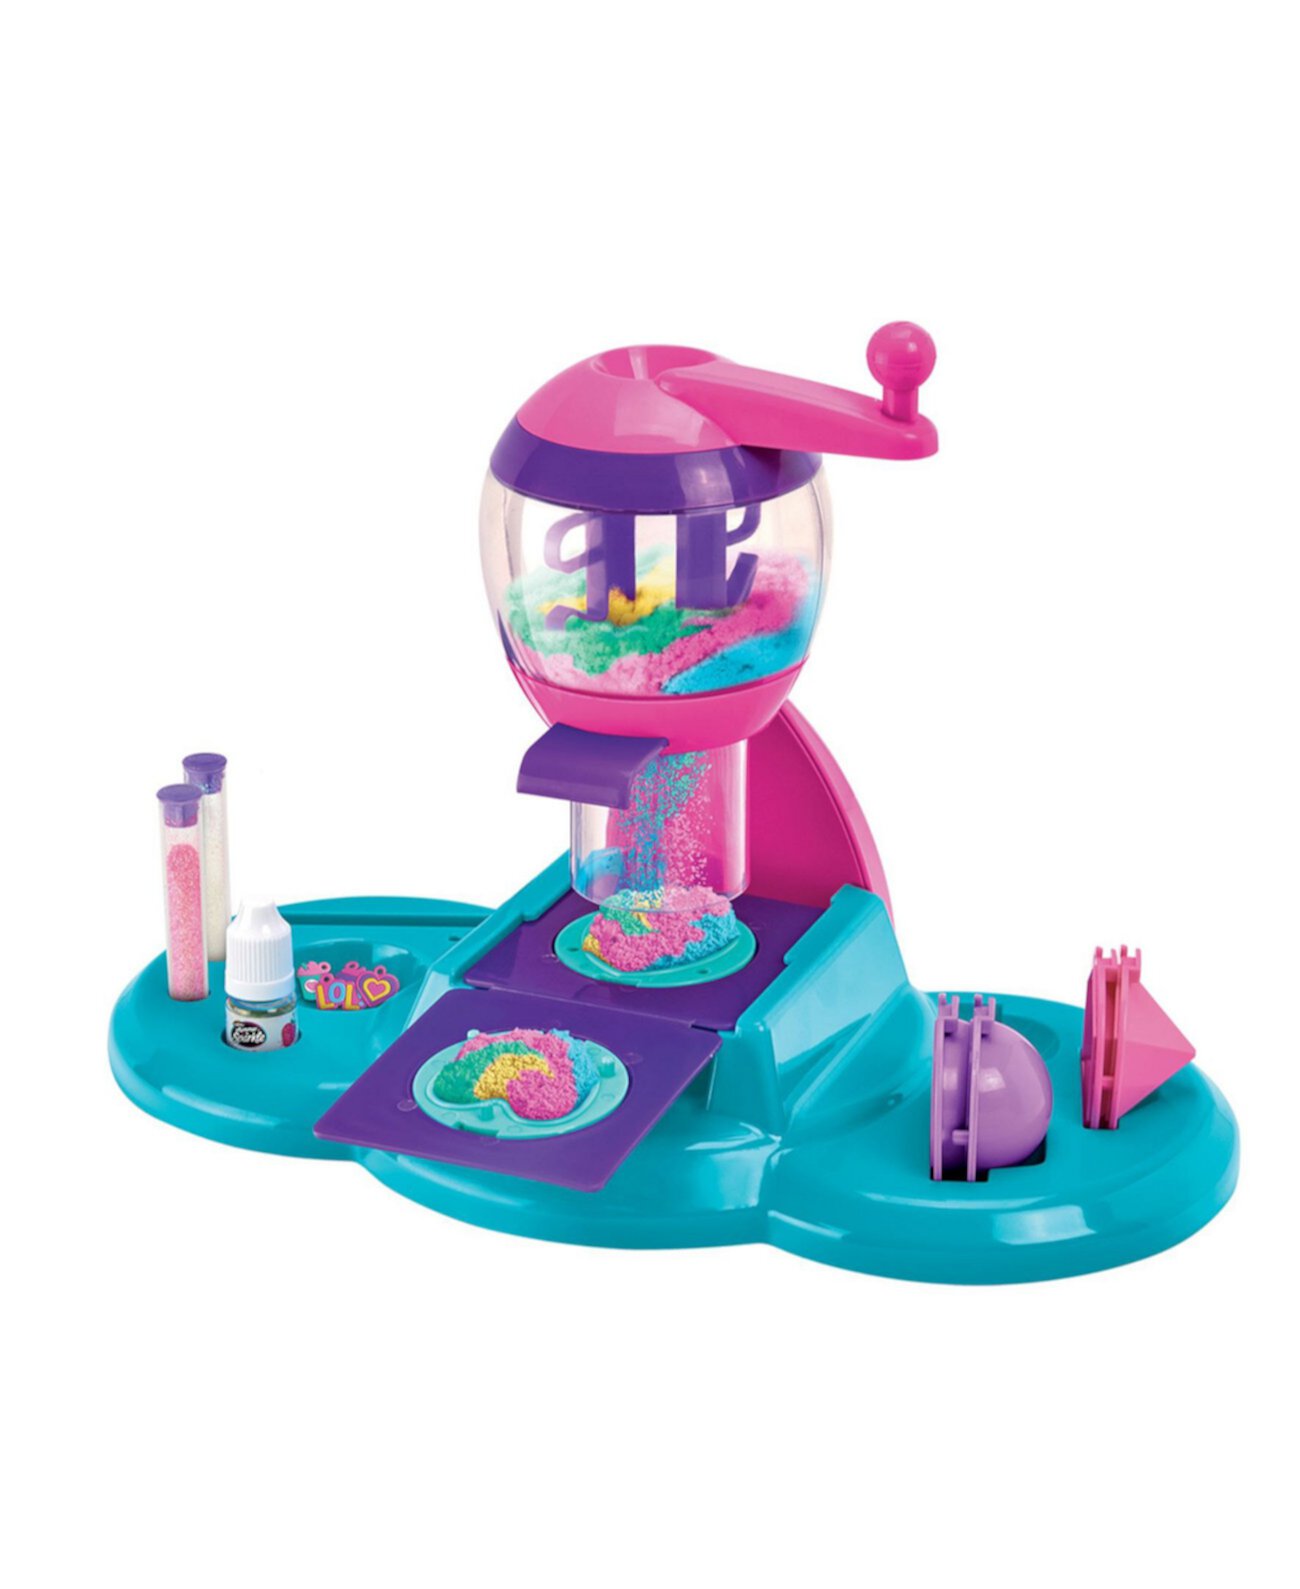 Создатель бомбы для ванны Car-Z-Art Shimmer and Sparkle Spa Creations Cra-Z-Art